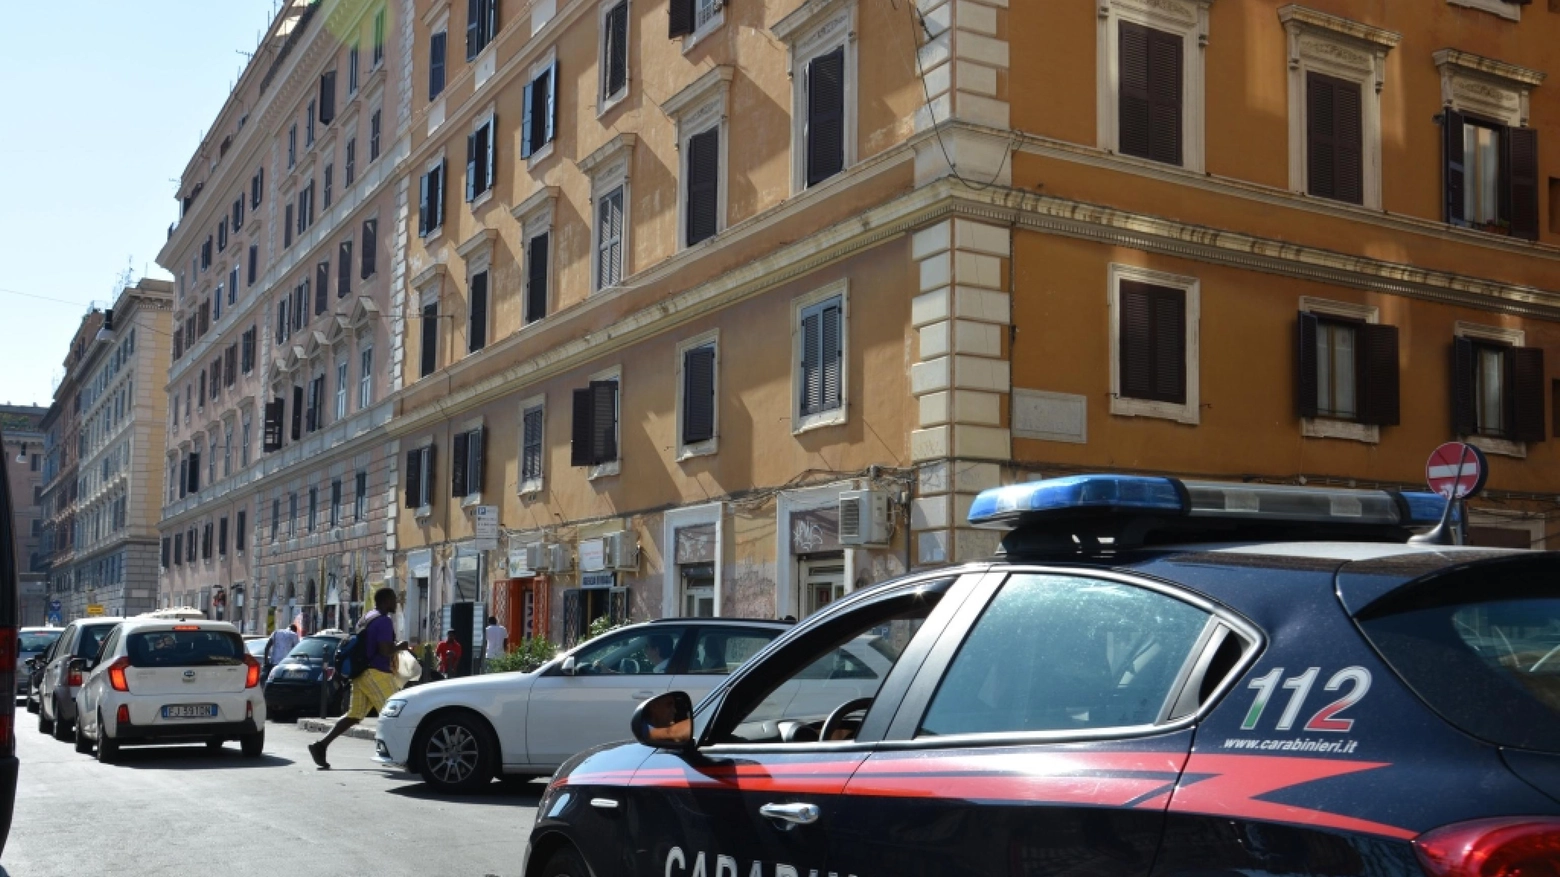 Carabinieri, controlli a Roma 